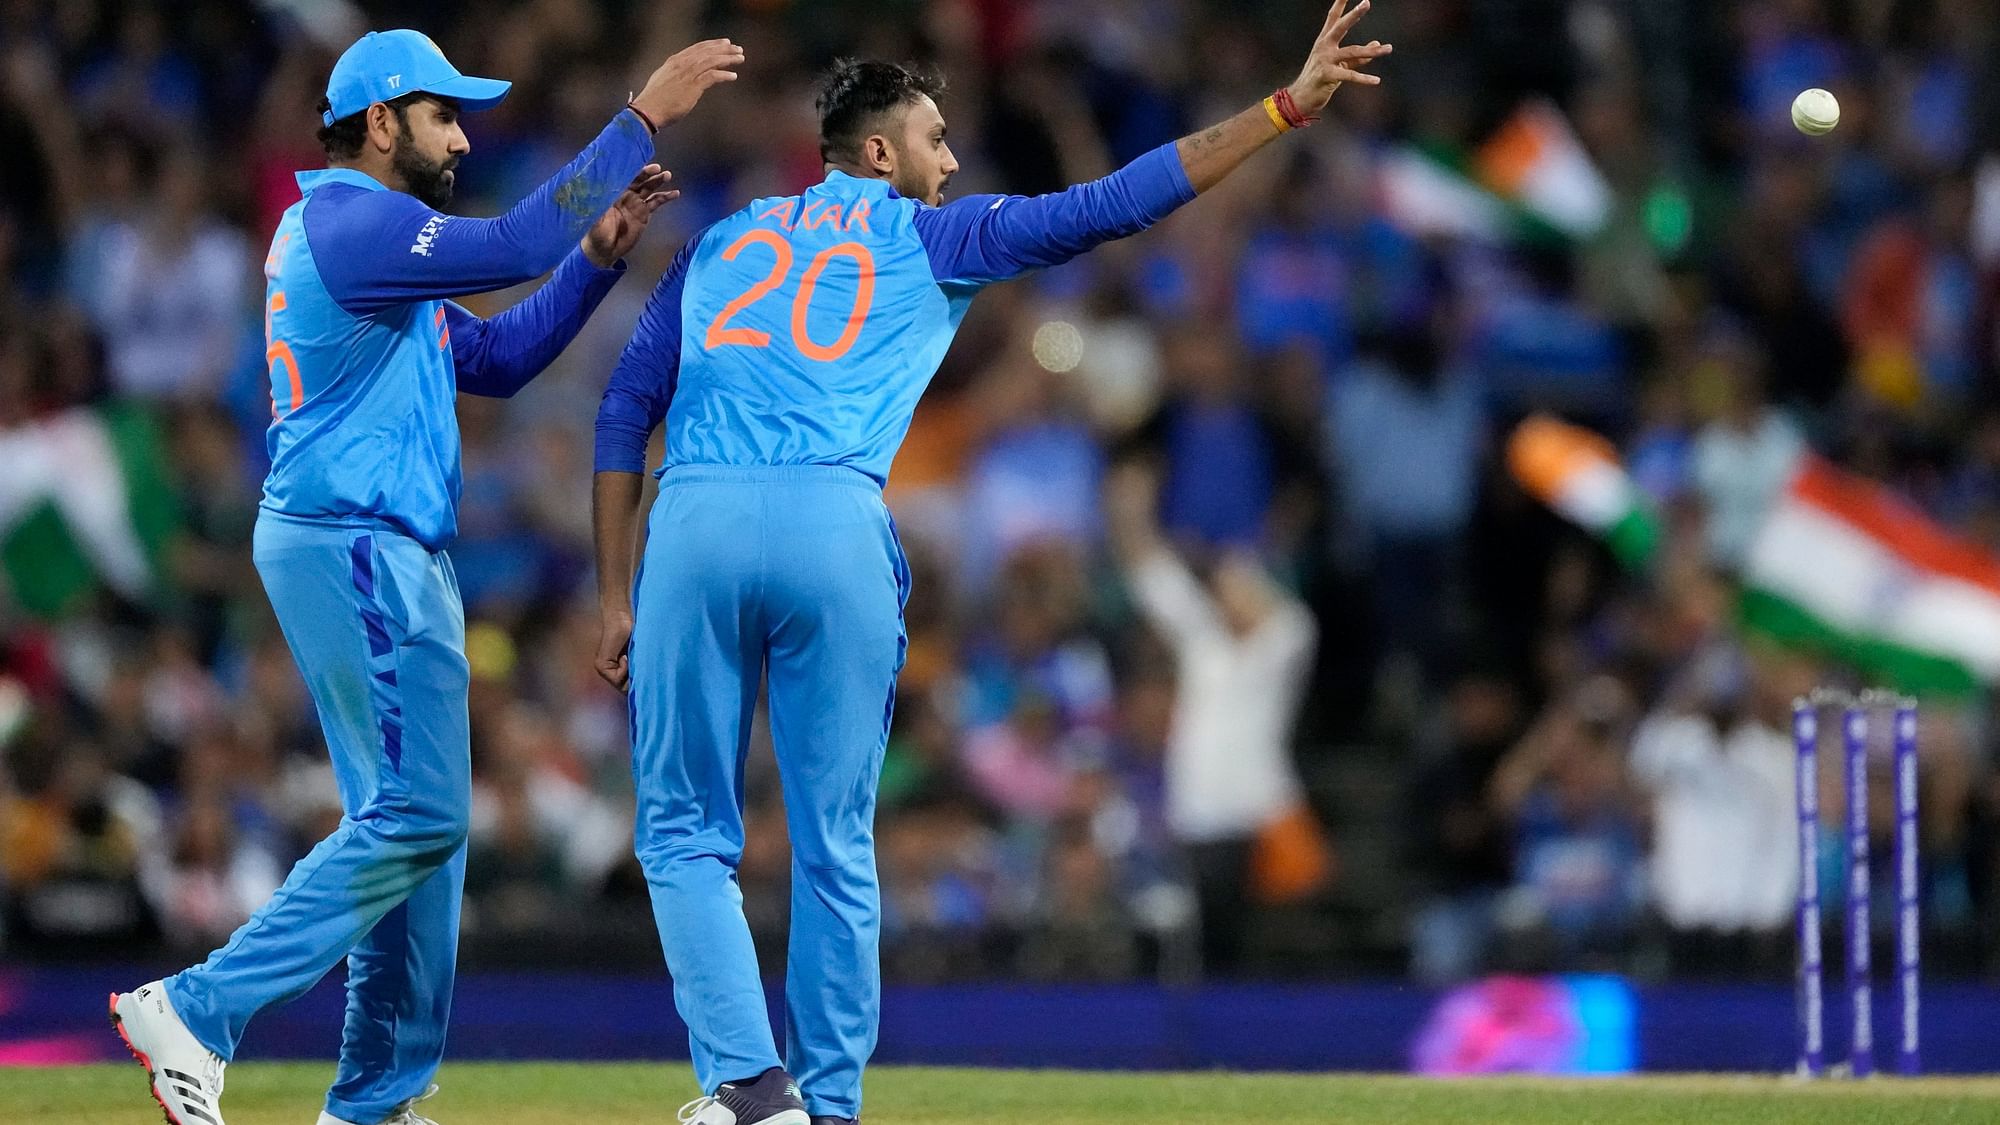 India vs Netherlands Highlights, IND vs NED Cricket Score, T20 World